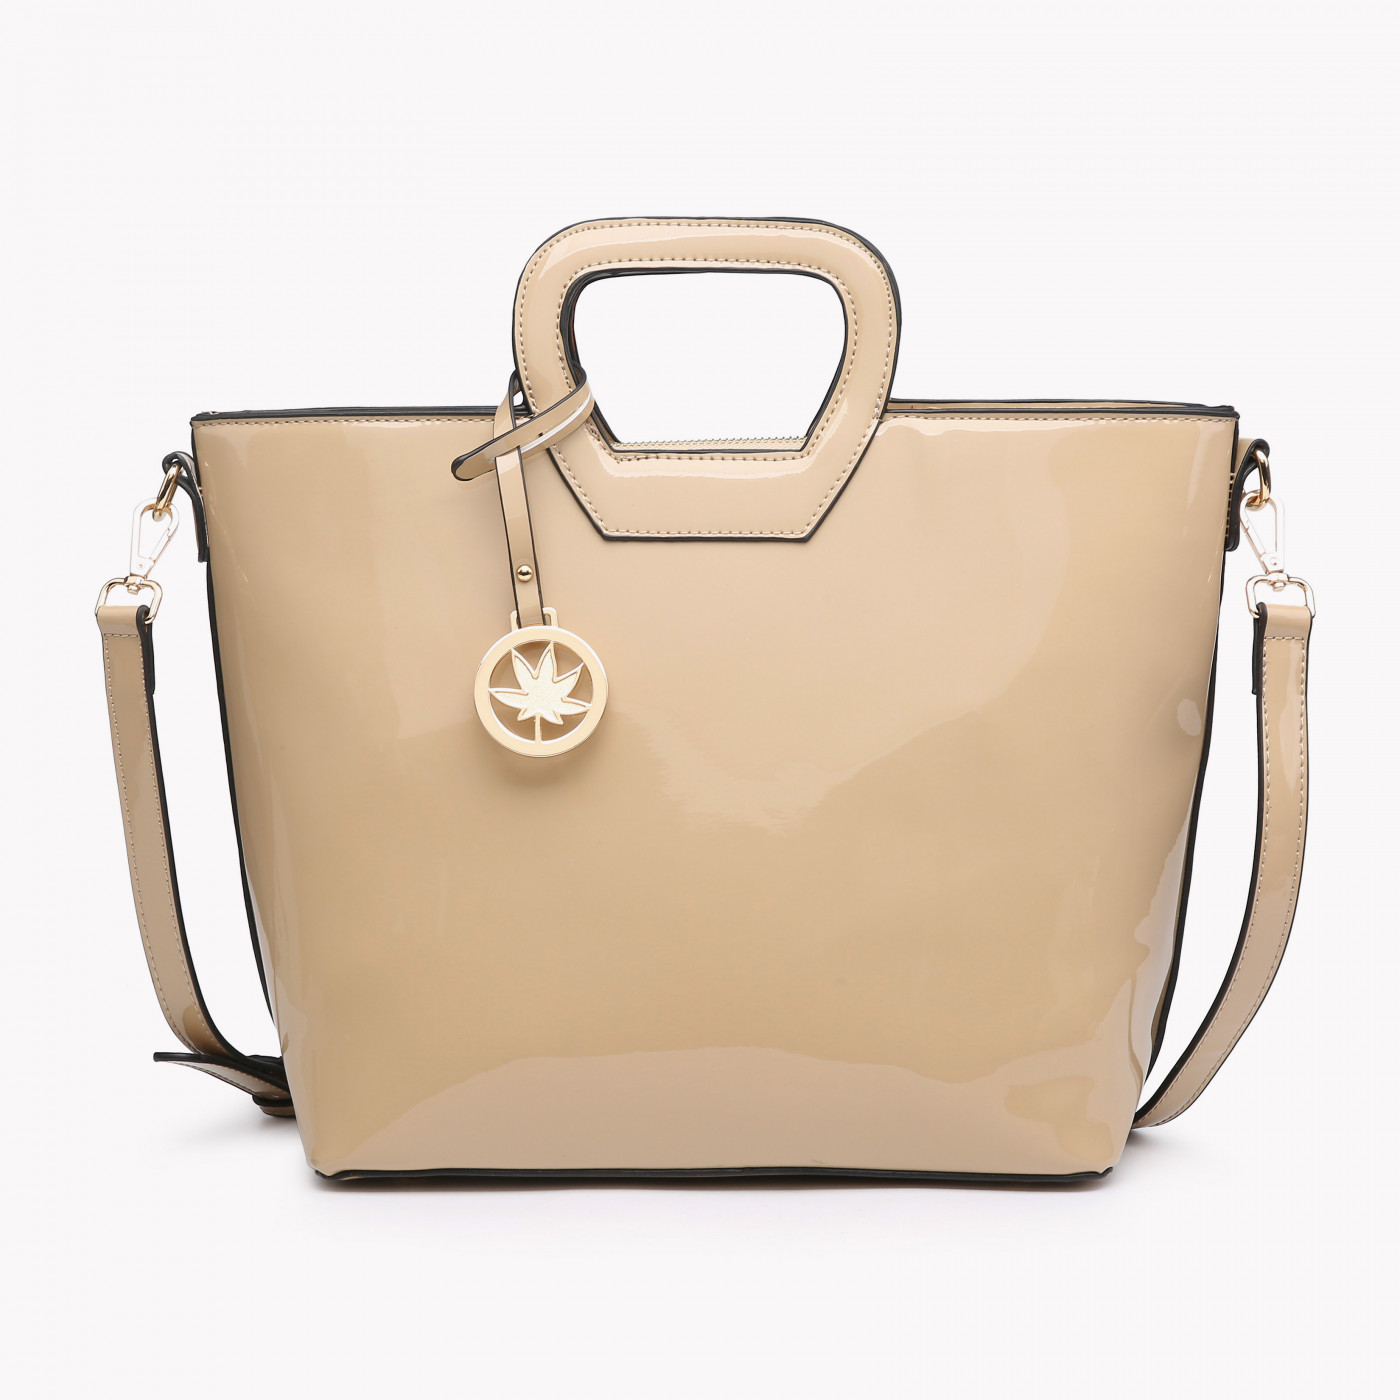 Jute Bag For Gift Manufacturer - GB 001 B - handcraftCustom.com